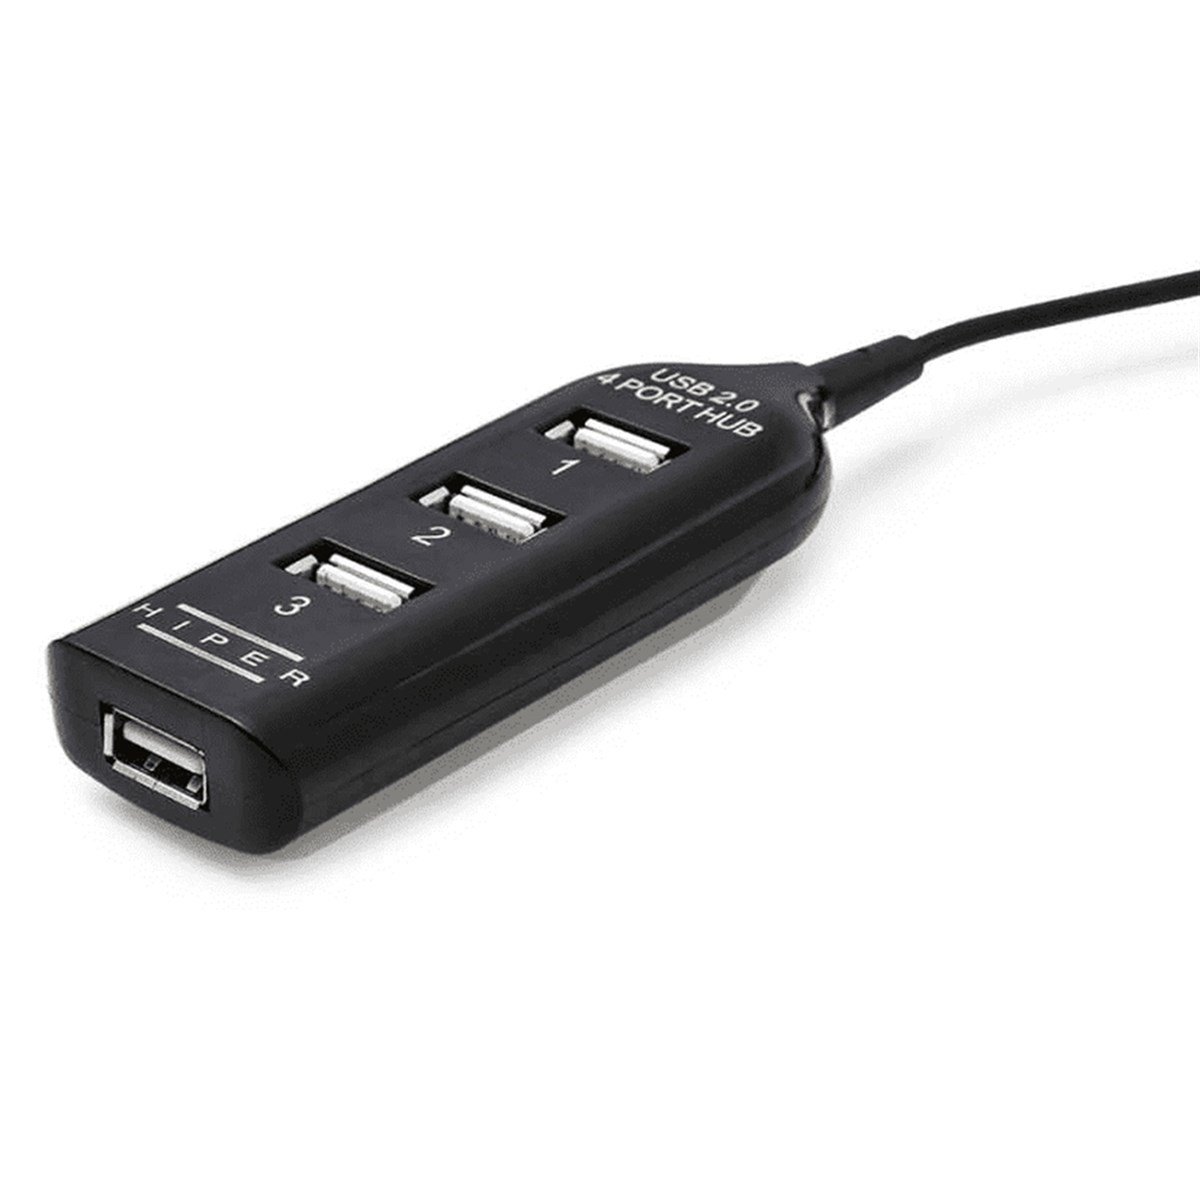 Hiper UH42 Usb Hub 4 Port USB 2.0 Çoklayıcı Siyah